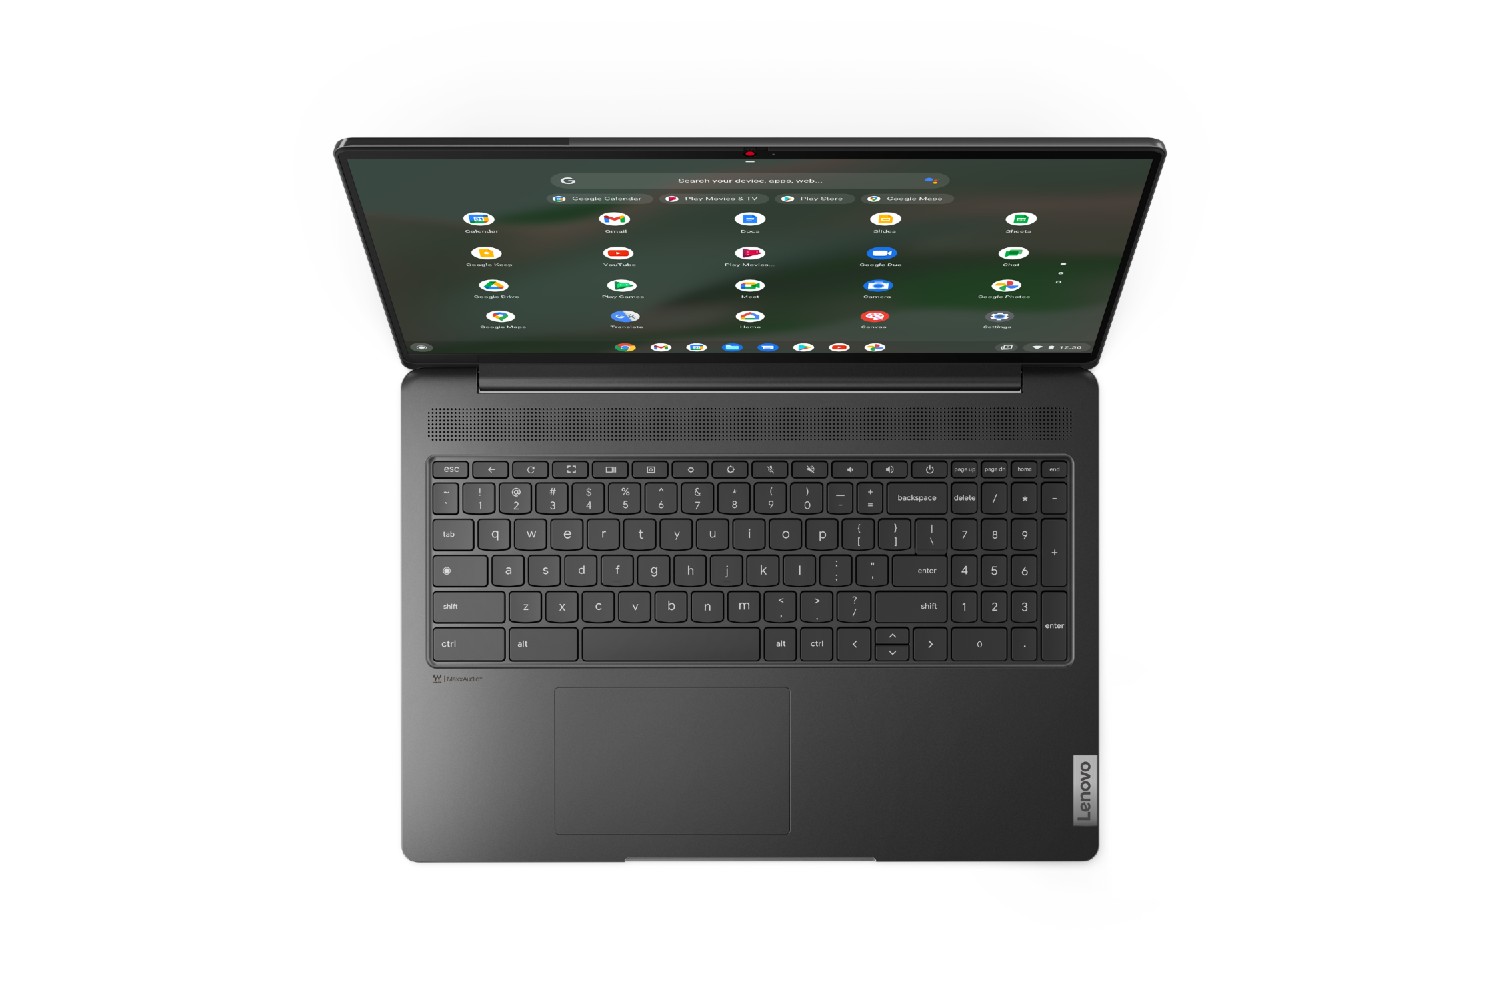 The keyboard of the IdeaPad 5i Chromebook.